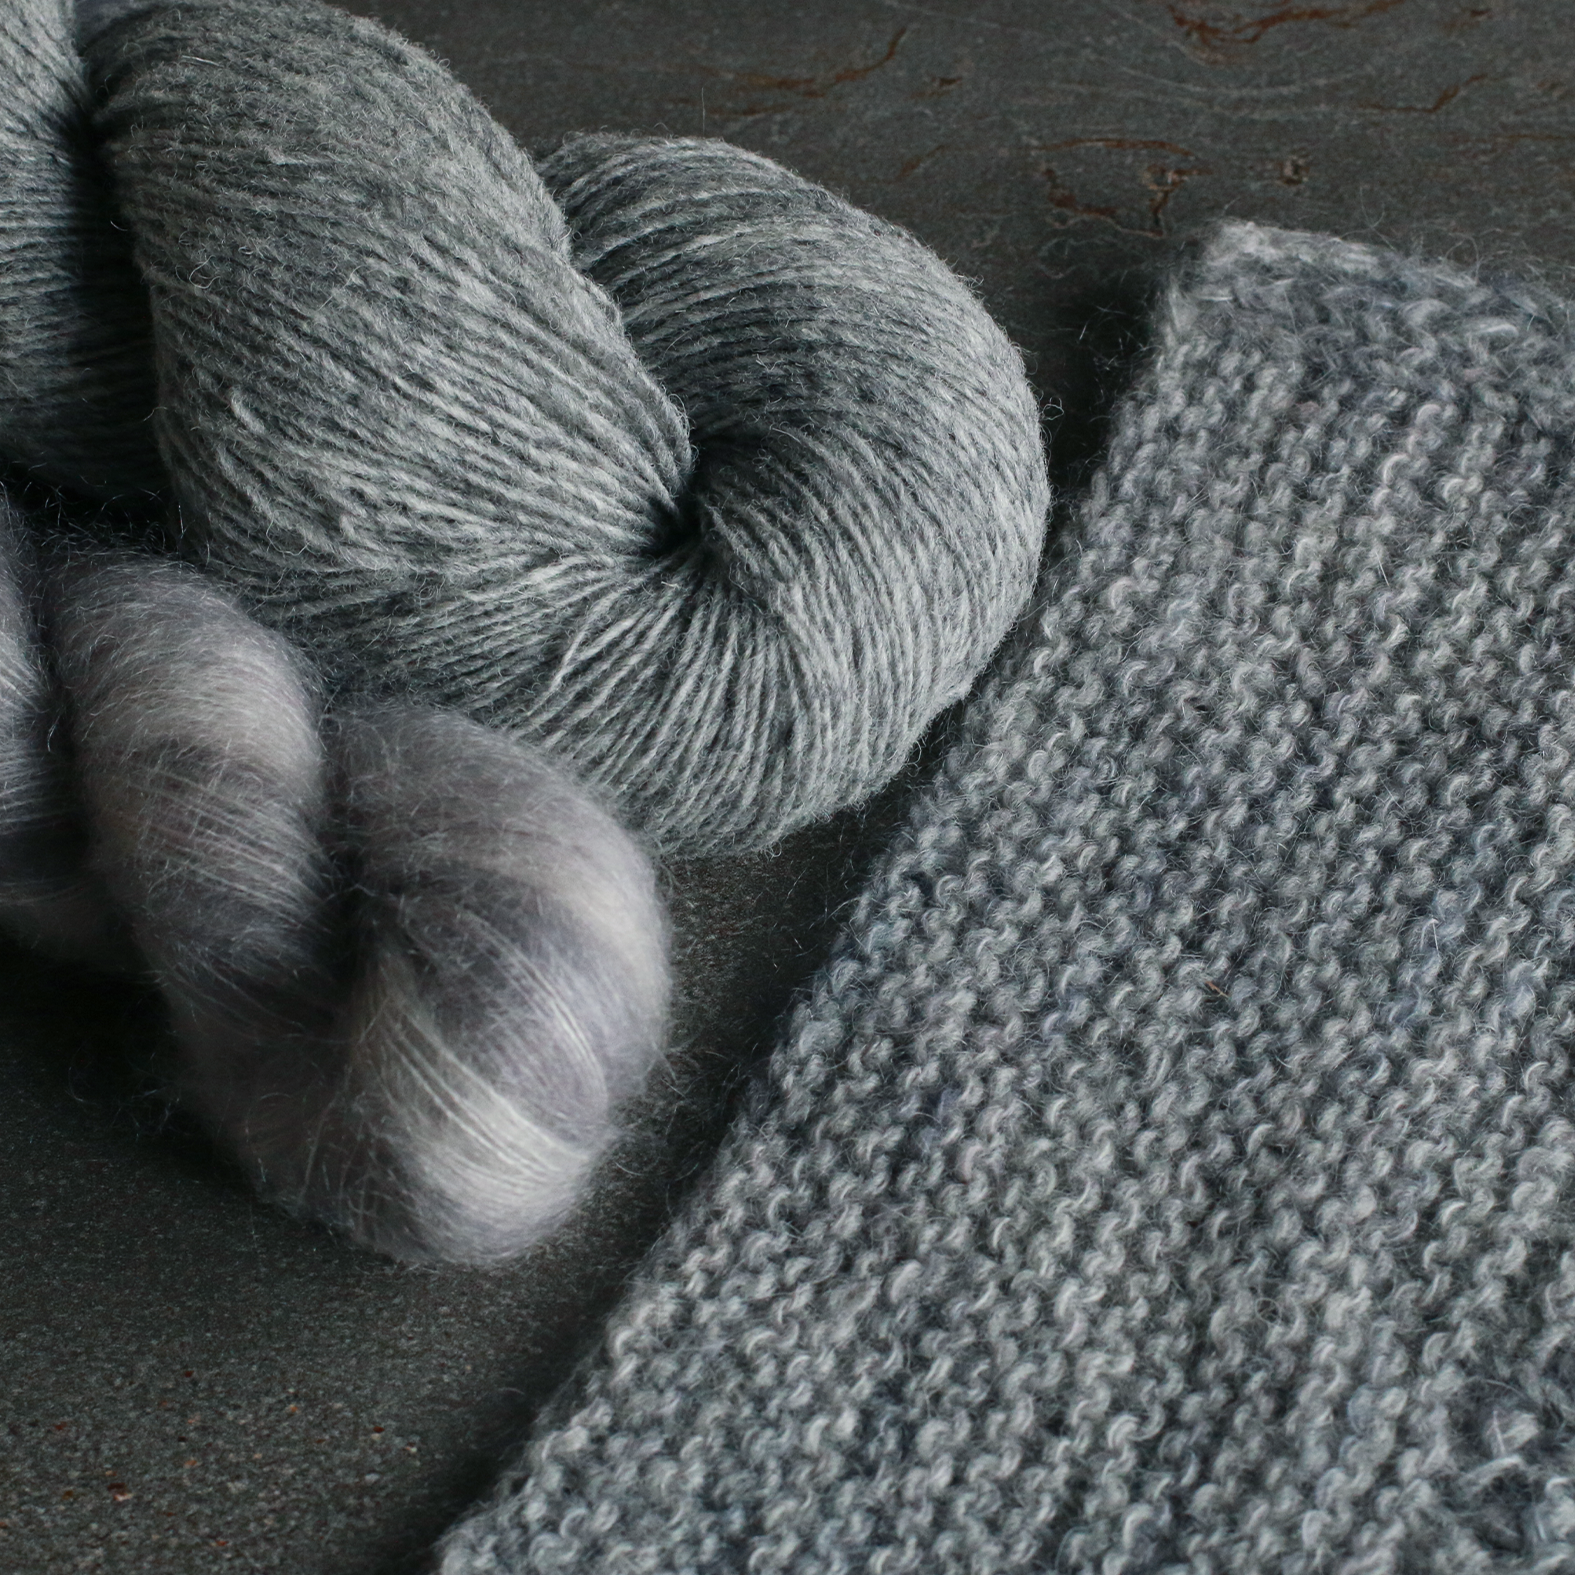 Iascaire Sweater Yarn Kit